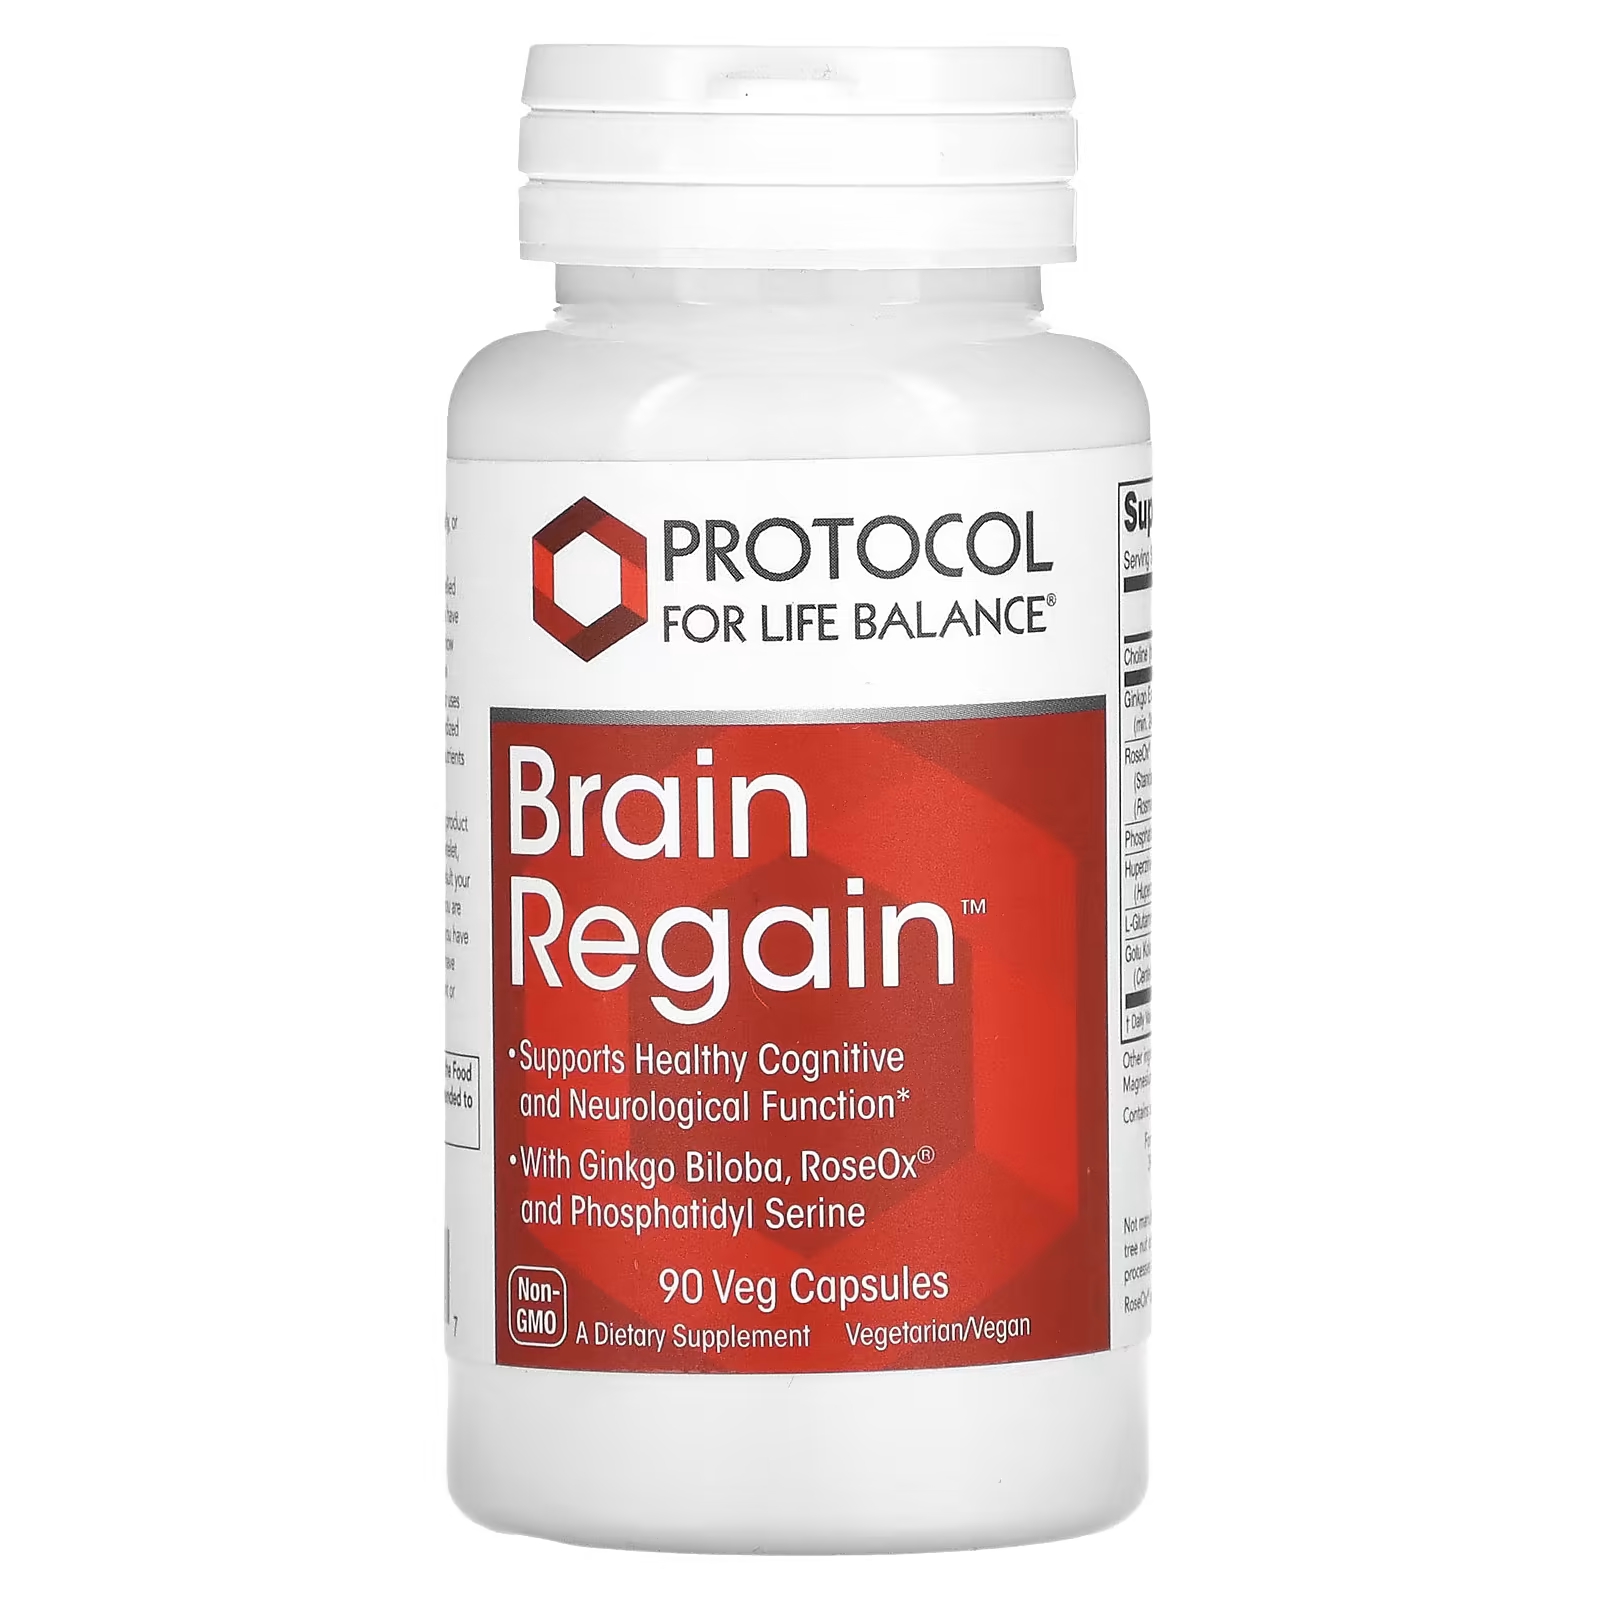 Пищевая добавка Protocol for Life Balance Brain Regain, 90 капсул цена и фото